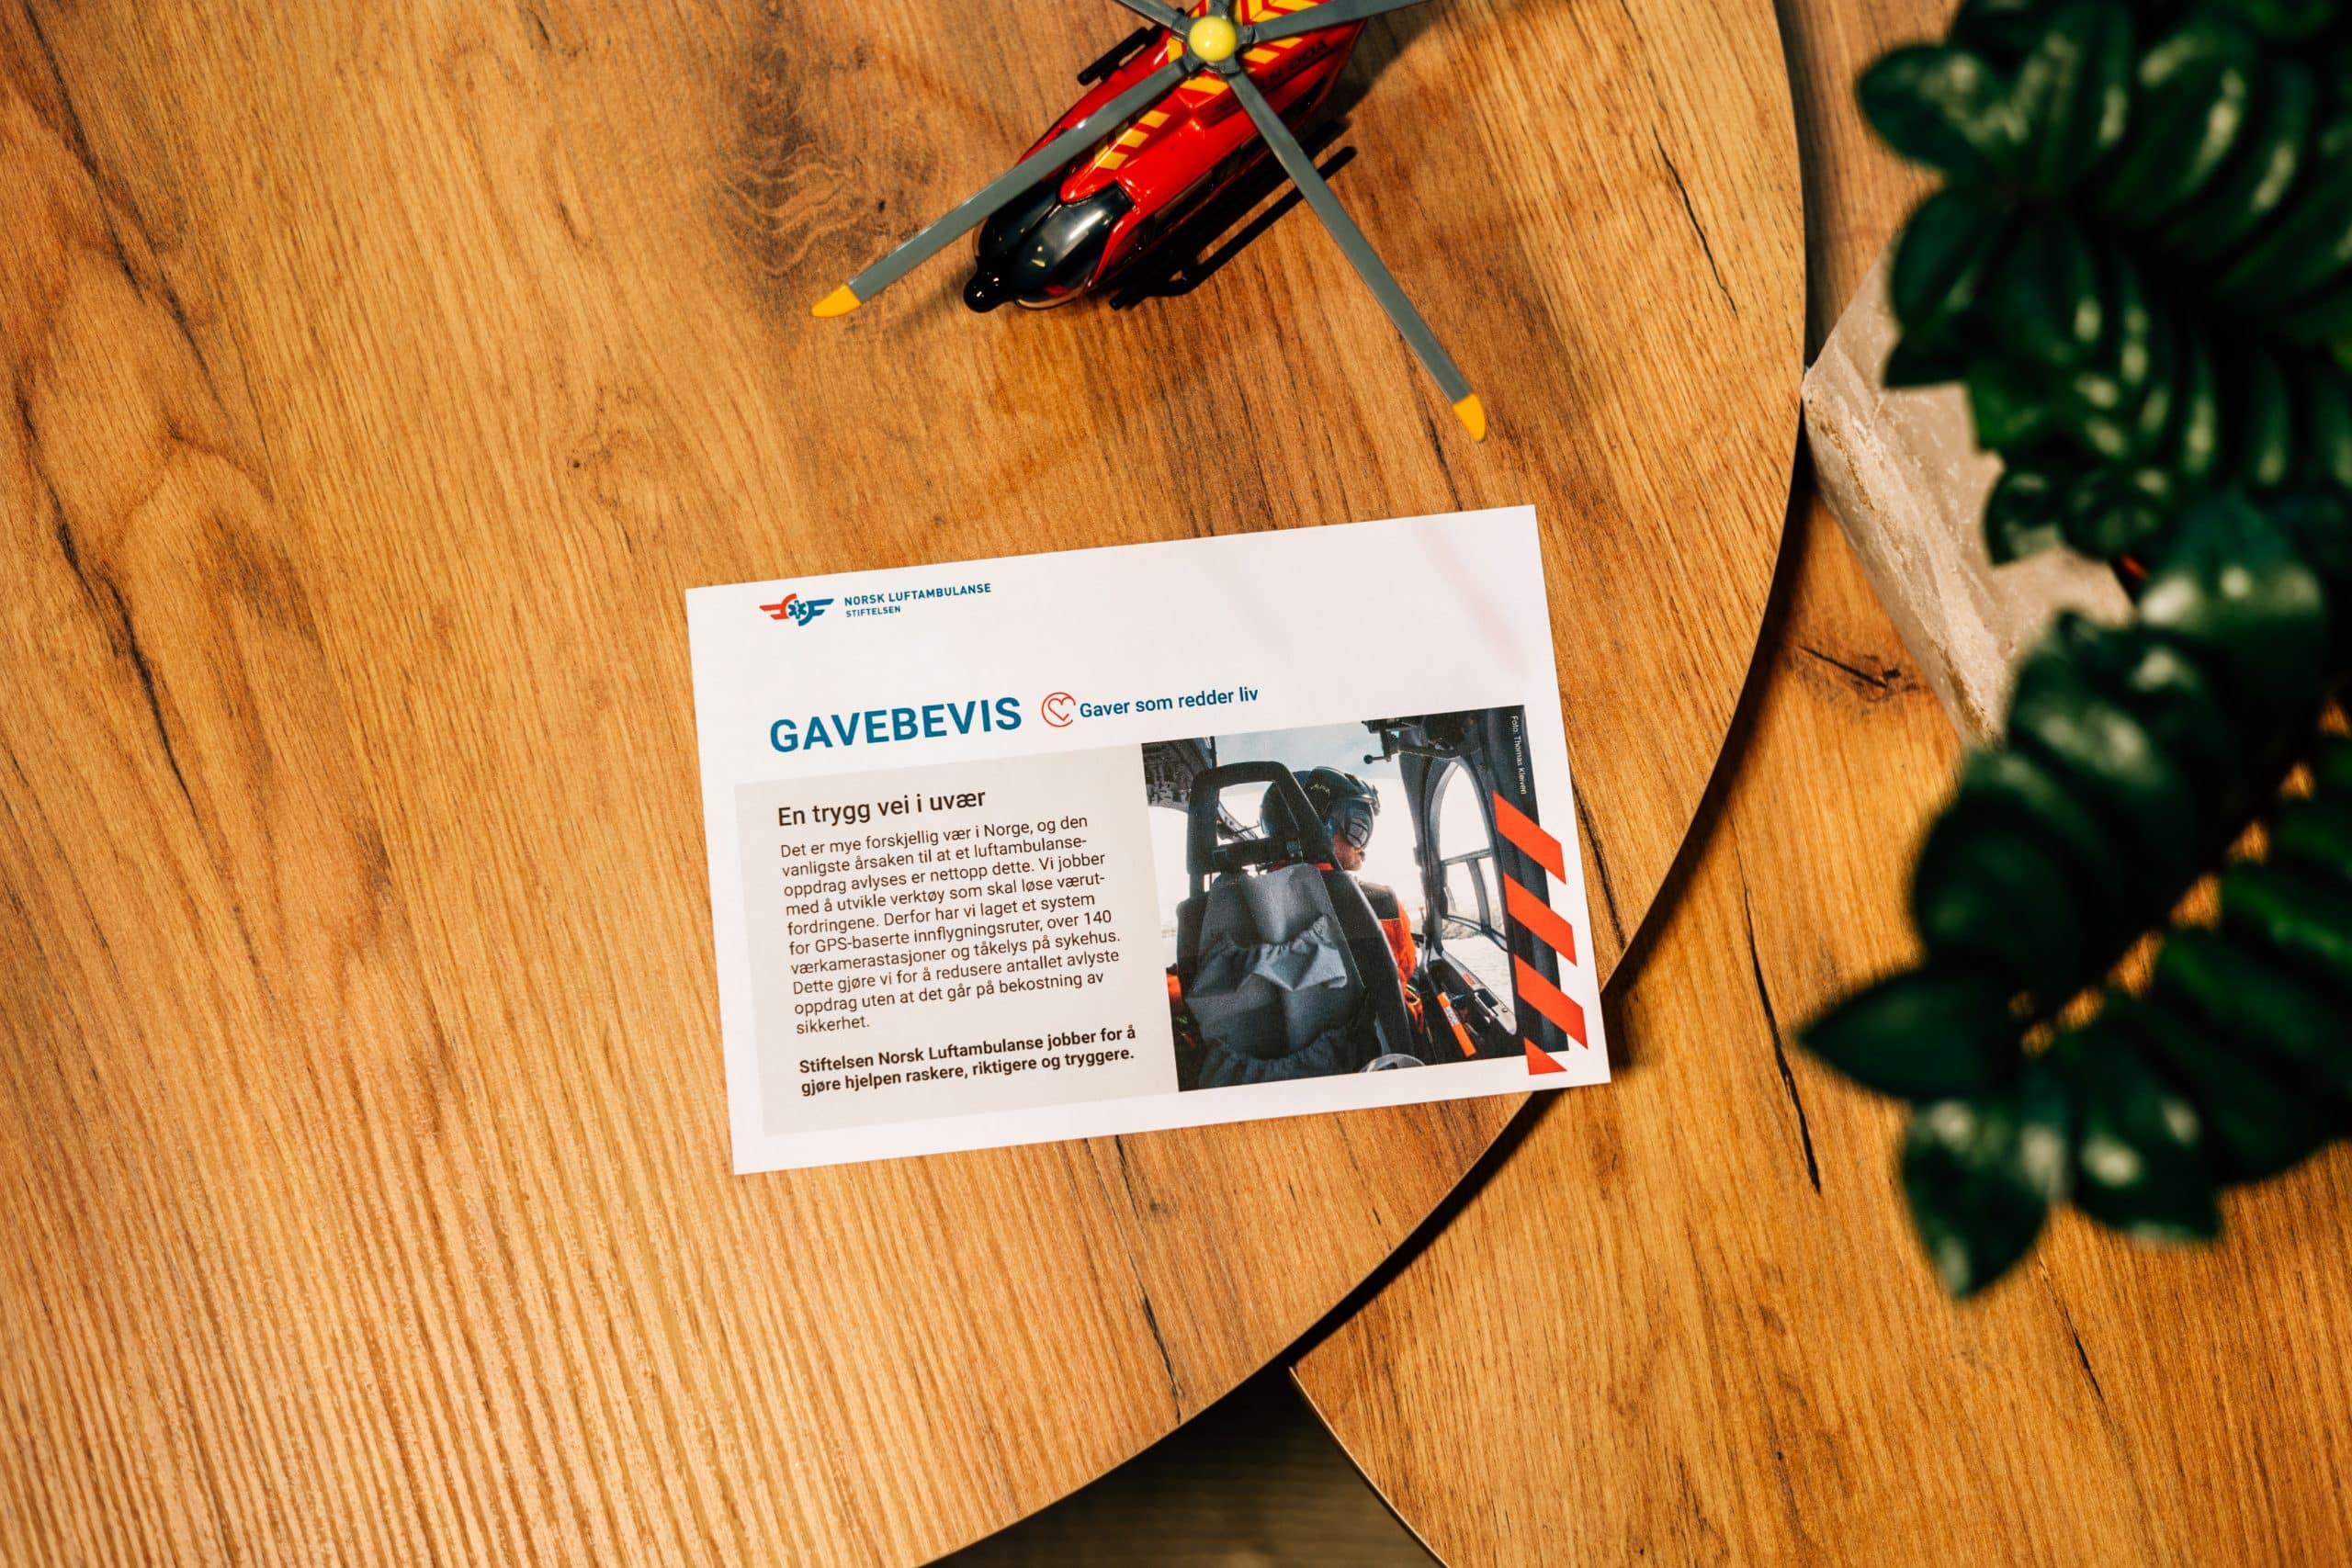 Gavebevis - En trygg vei i uvær